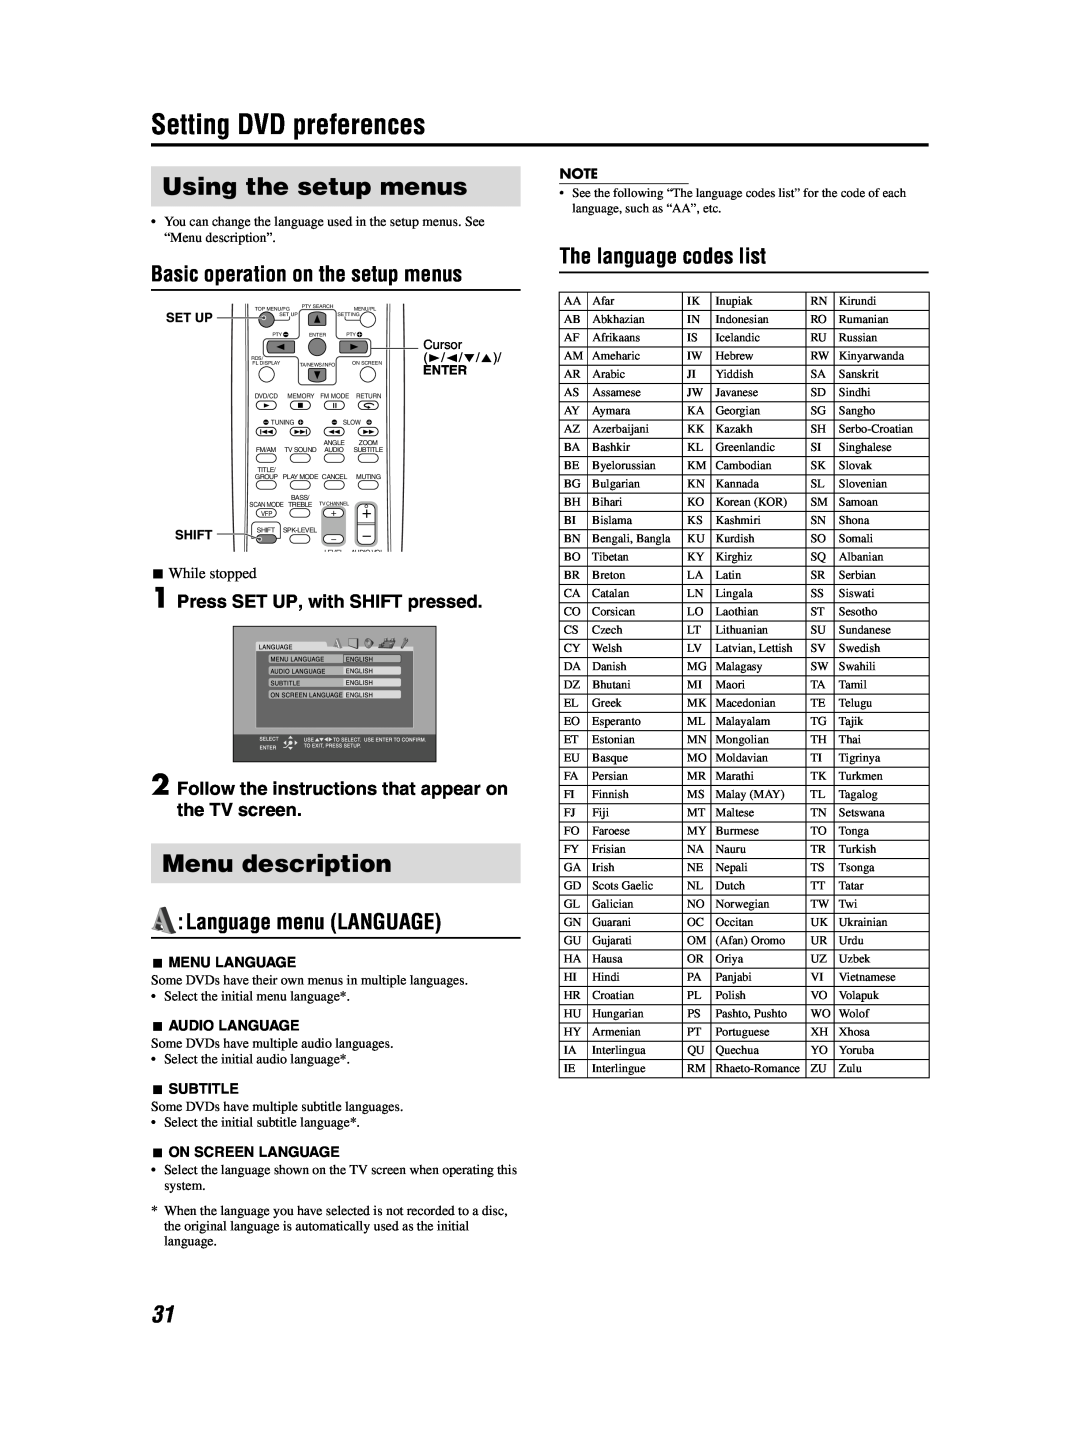 JVC GVT0155-001A manual Setting DVD preferences, Using the setup menus, Menu description, Press SET UP, with SHIFT pressed 